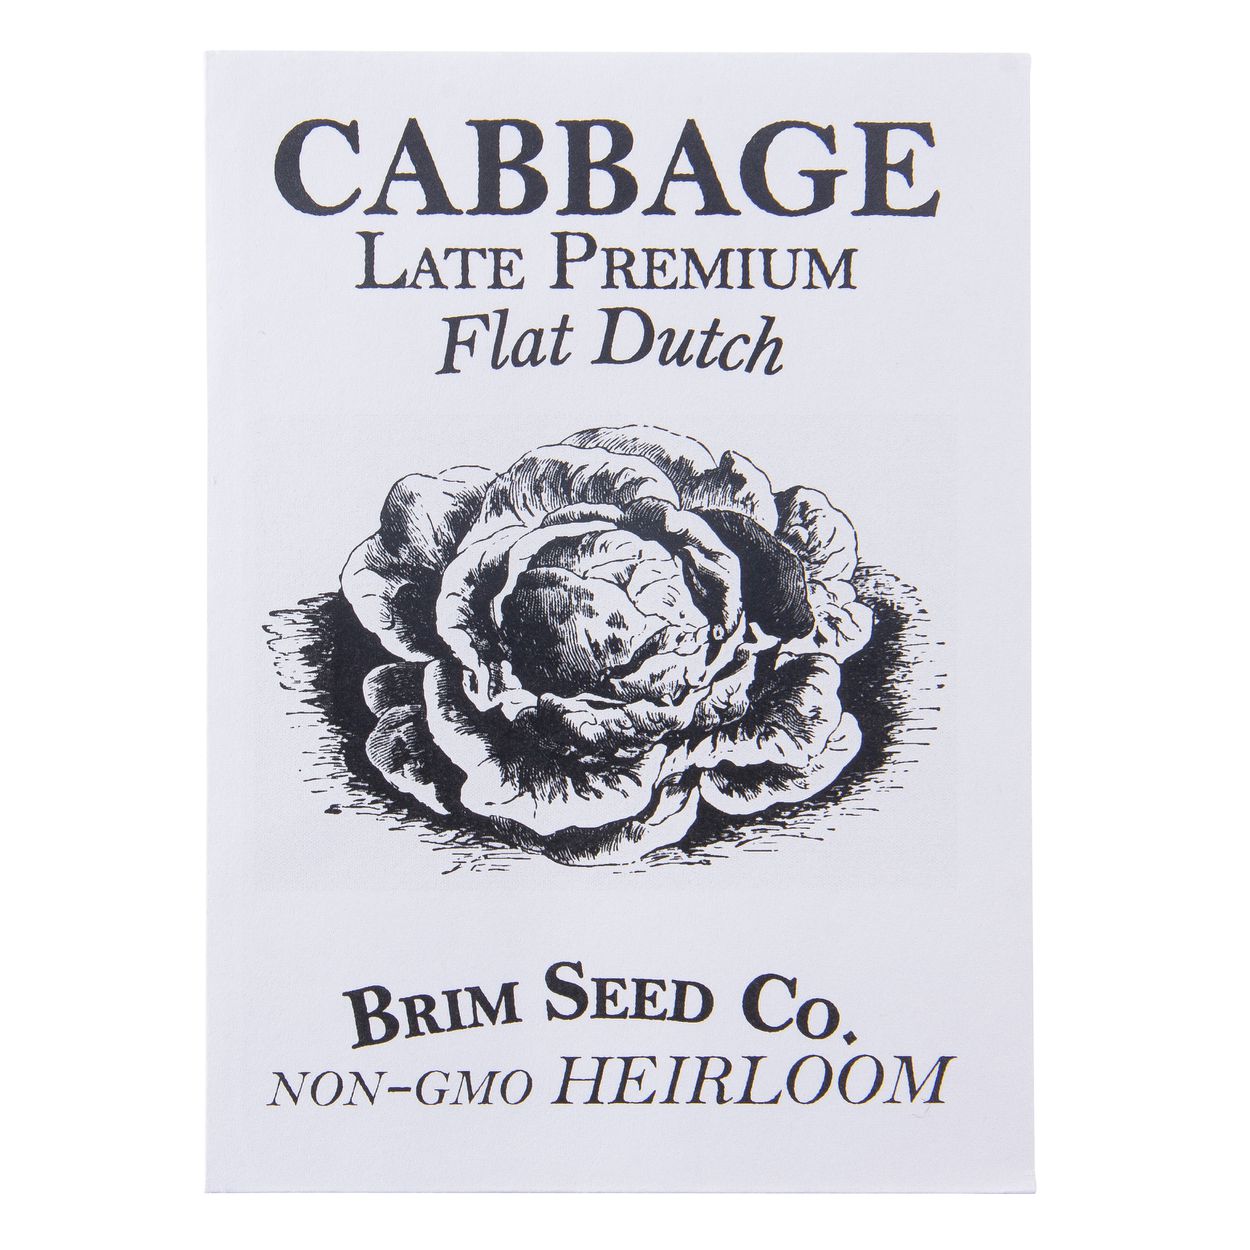 Brim Seed Co. - Late Premium Flat Dutch Cabbage Heirloom Seed